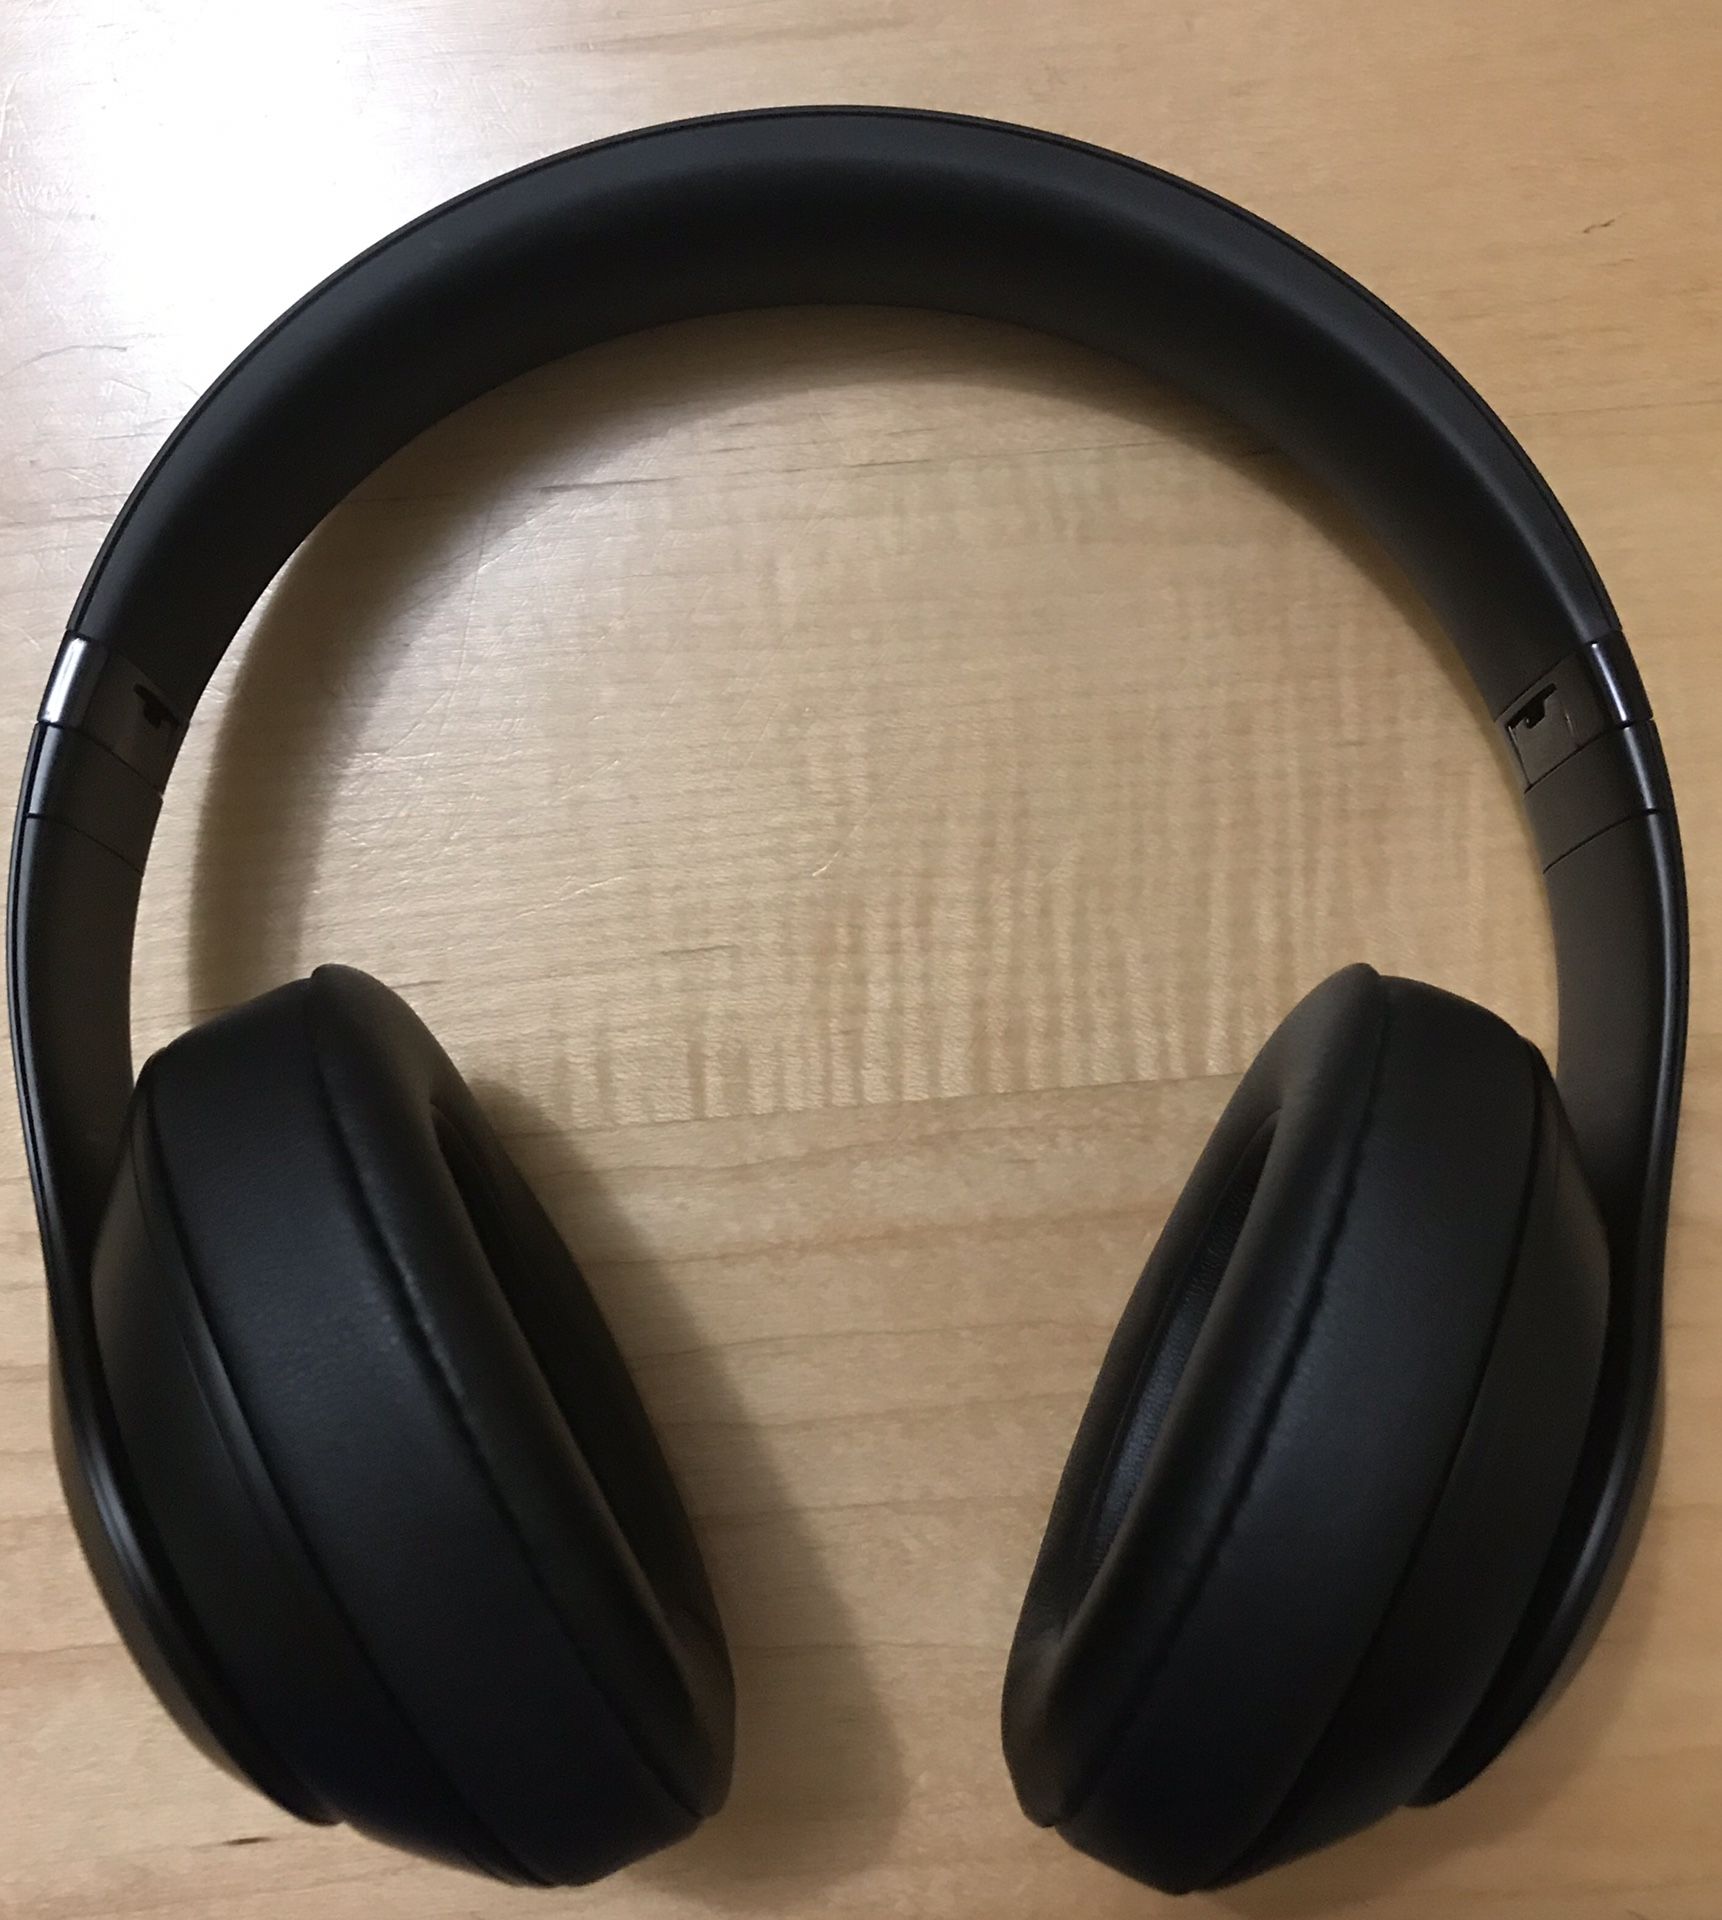 NEW Beats STUDIO 3 Wireless (not solo) Bluetooth headphones - all black